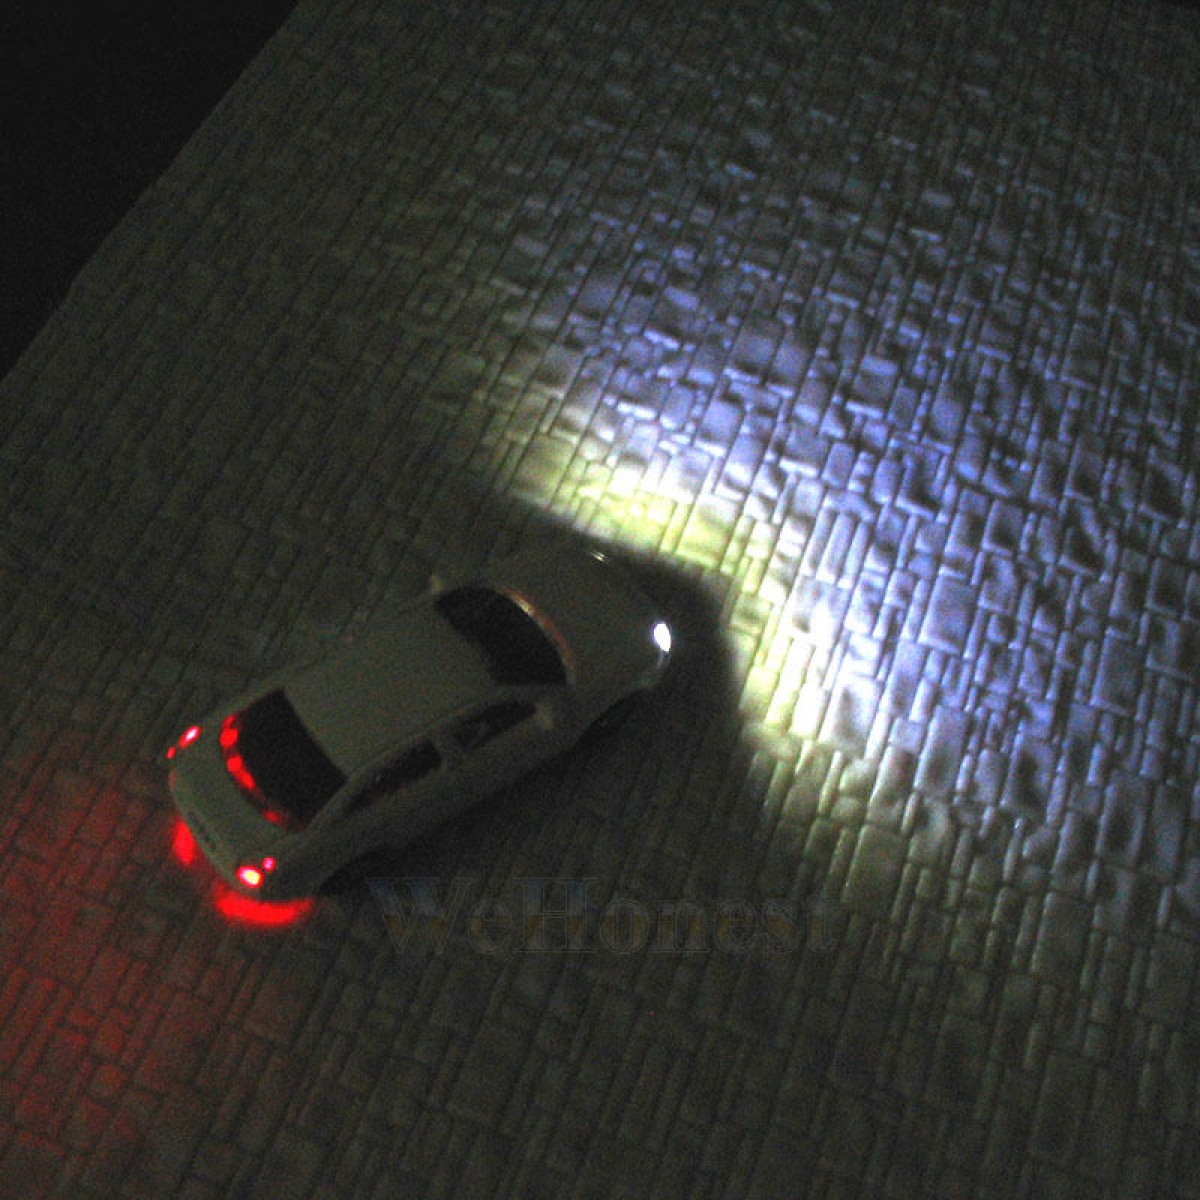   5 pcs  HO Scale Model Lighted Cars with 12V LEDs lights  (WeHonest)